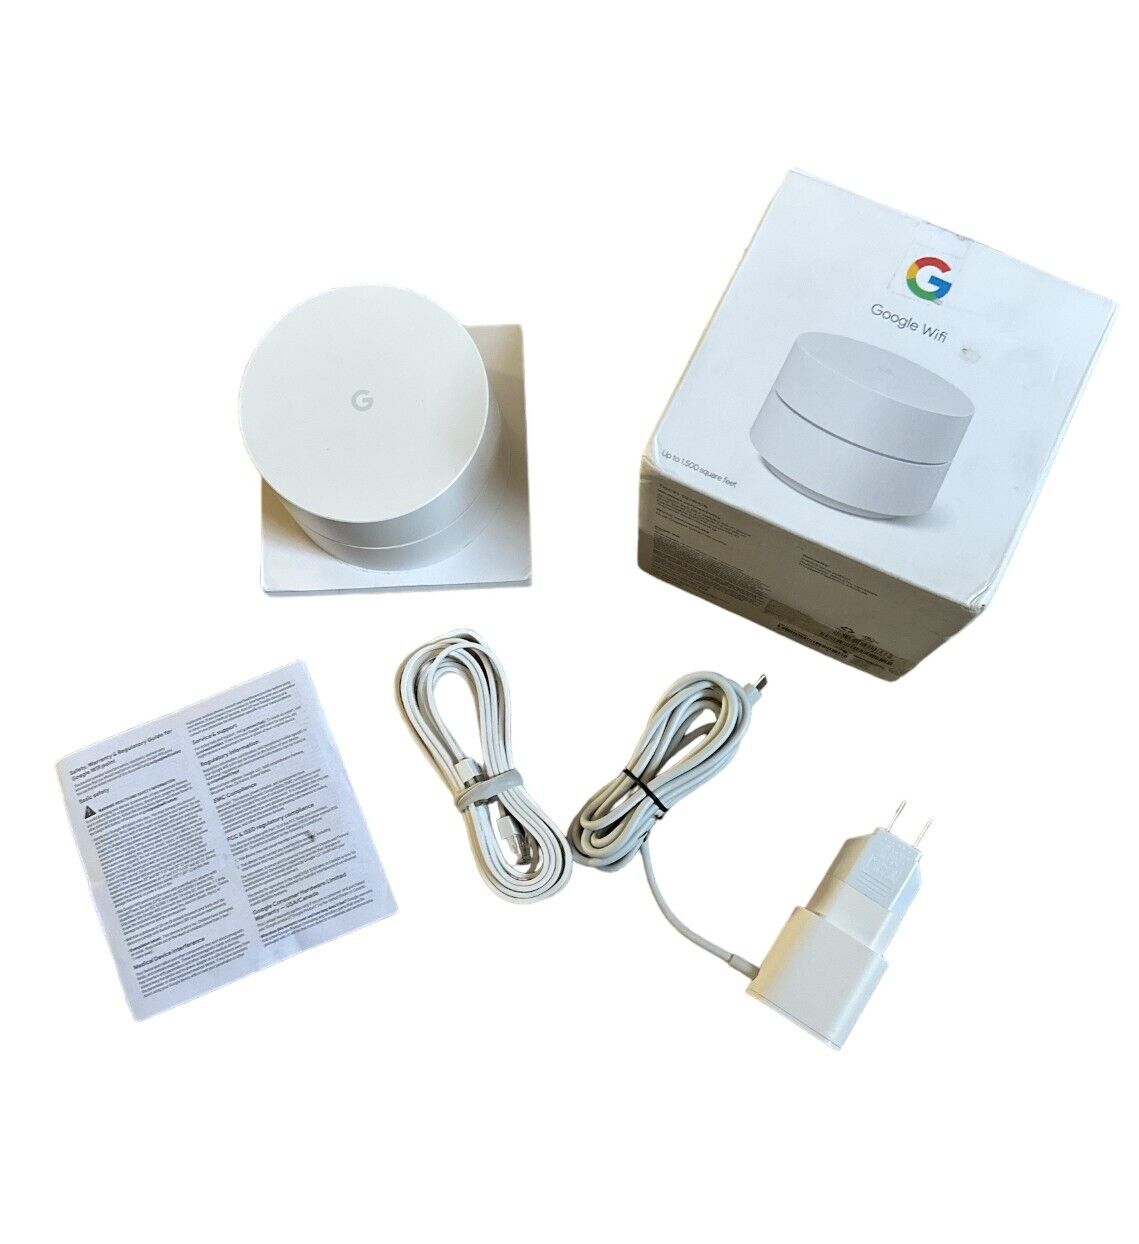 Google GA02430-US Wi-Fi Mesh Router 1 Pack - White